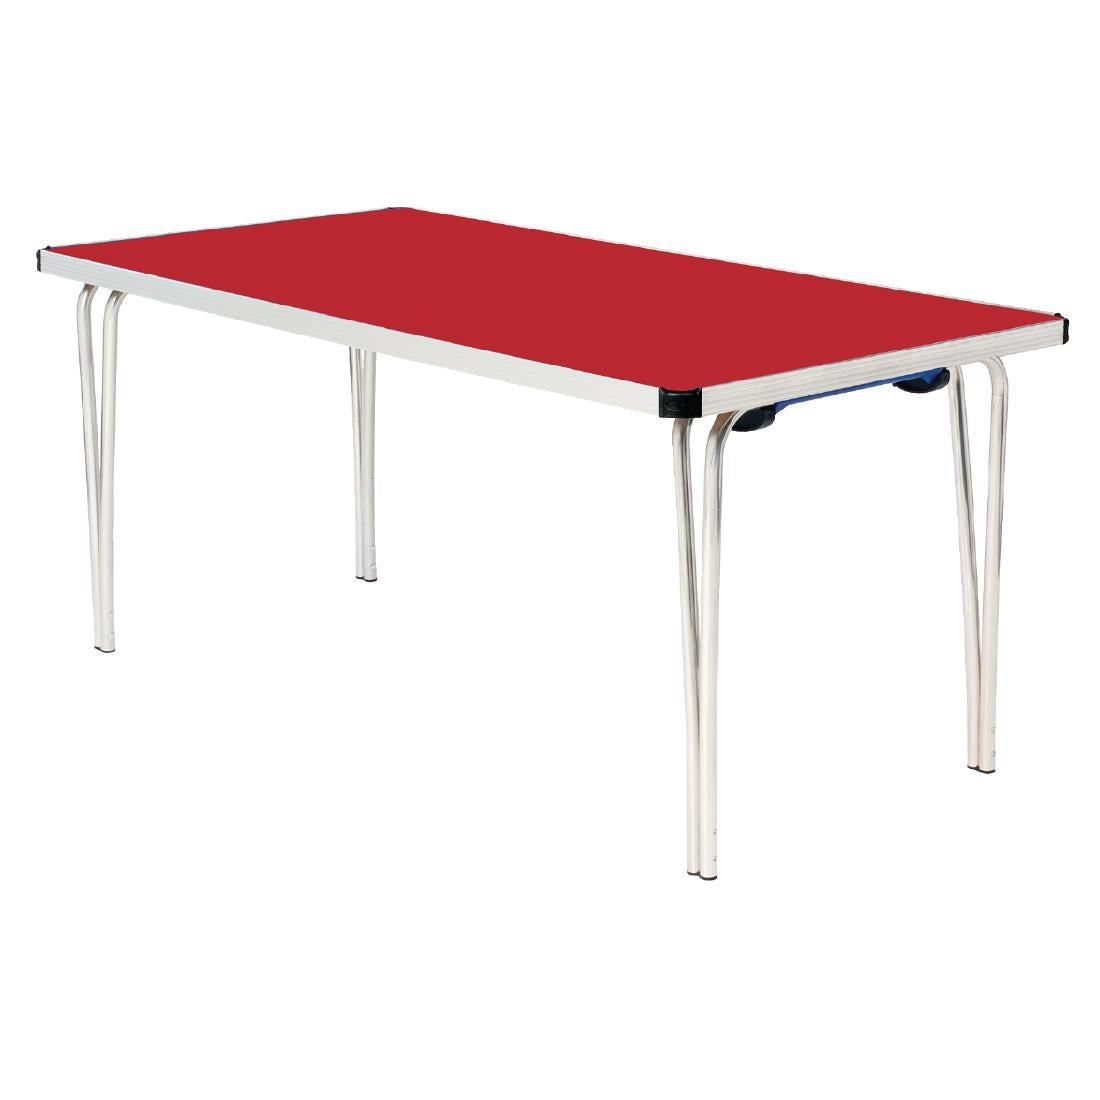 DM948 Gopak Contour Folding Table Red 6ft JD Catering Equipment Solutions Ltd